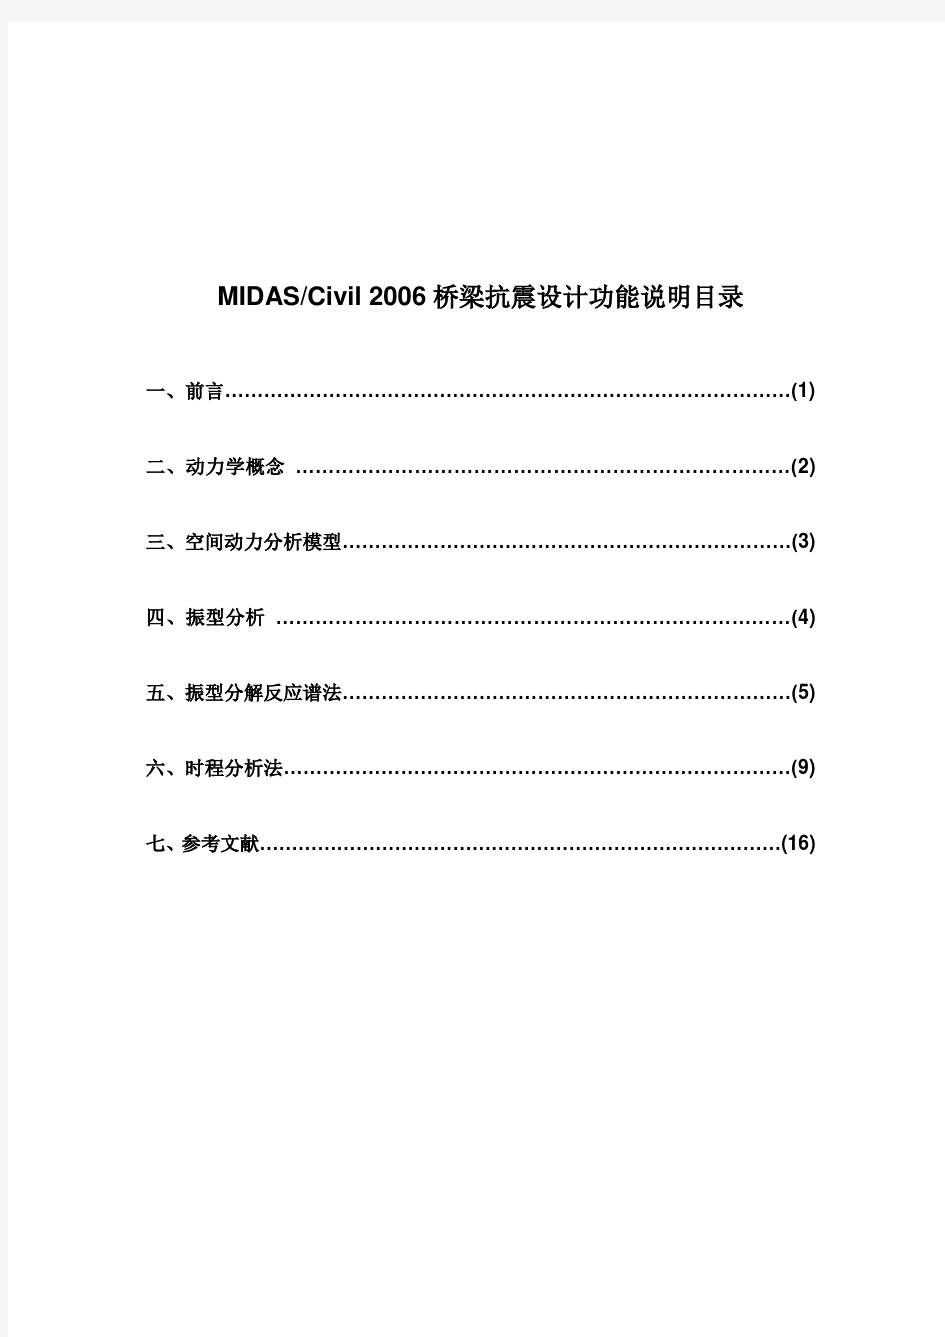 MIDAS Civil2006抗震设计功能说明-20070301